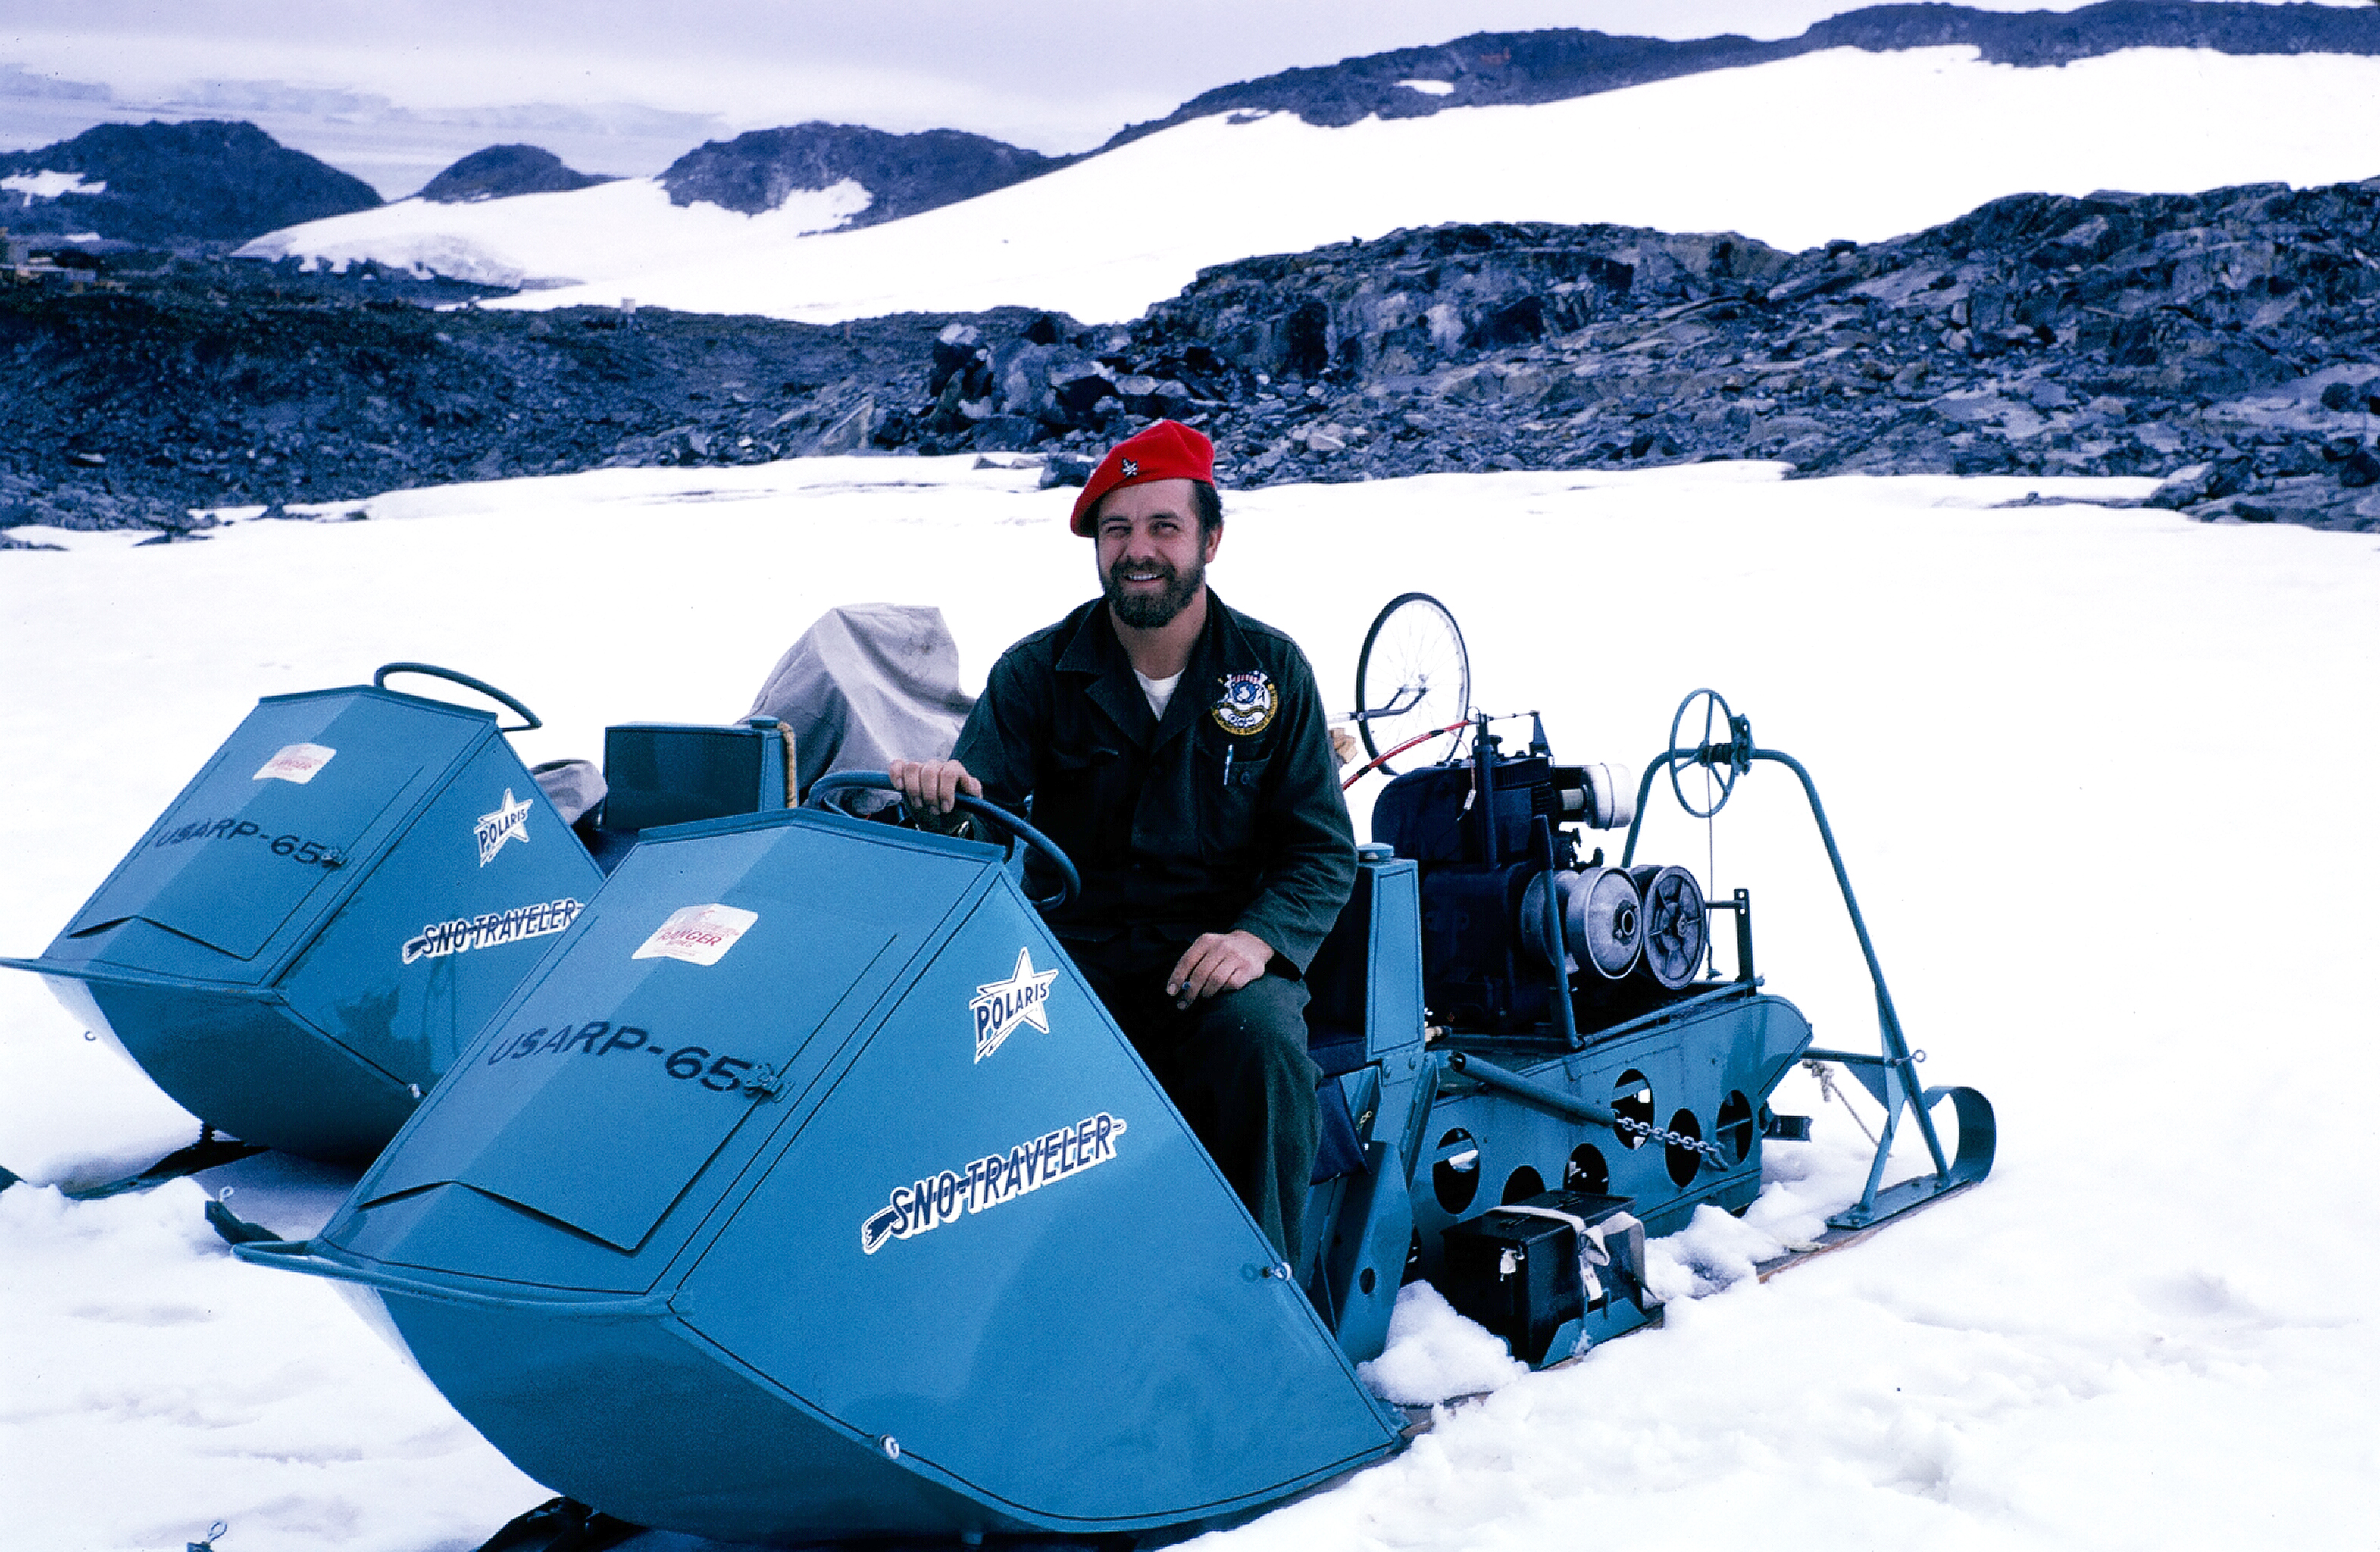 File:Polaris snowmobile 1965.JPG - Wikipedia